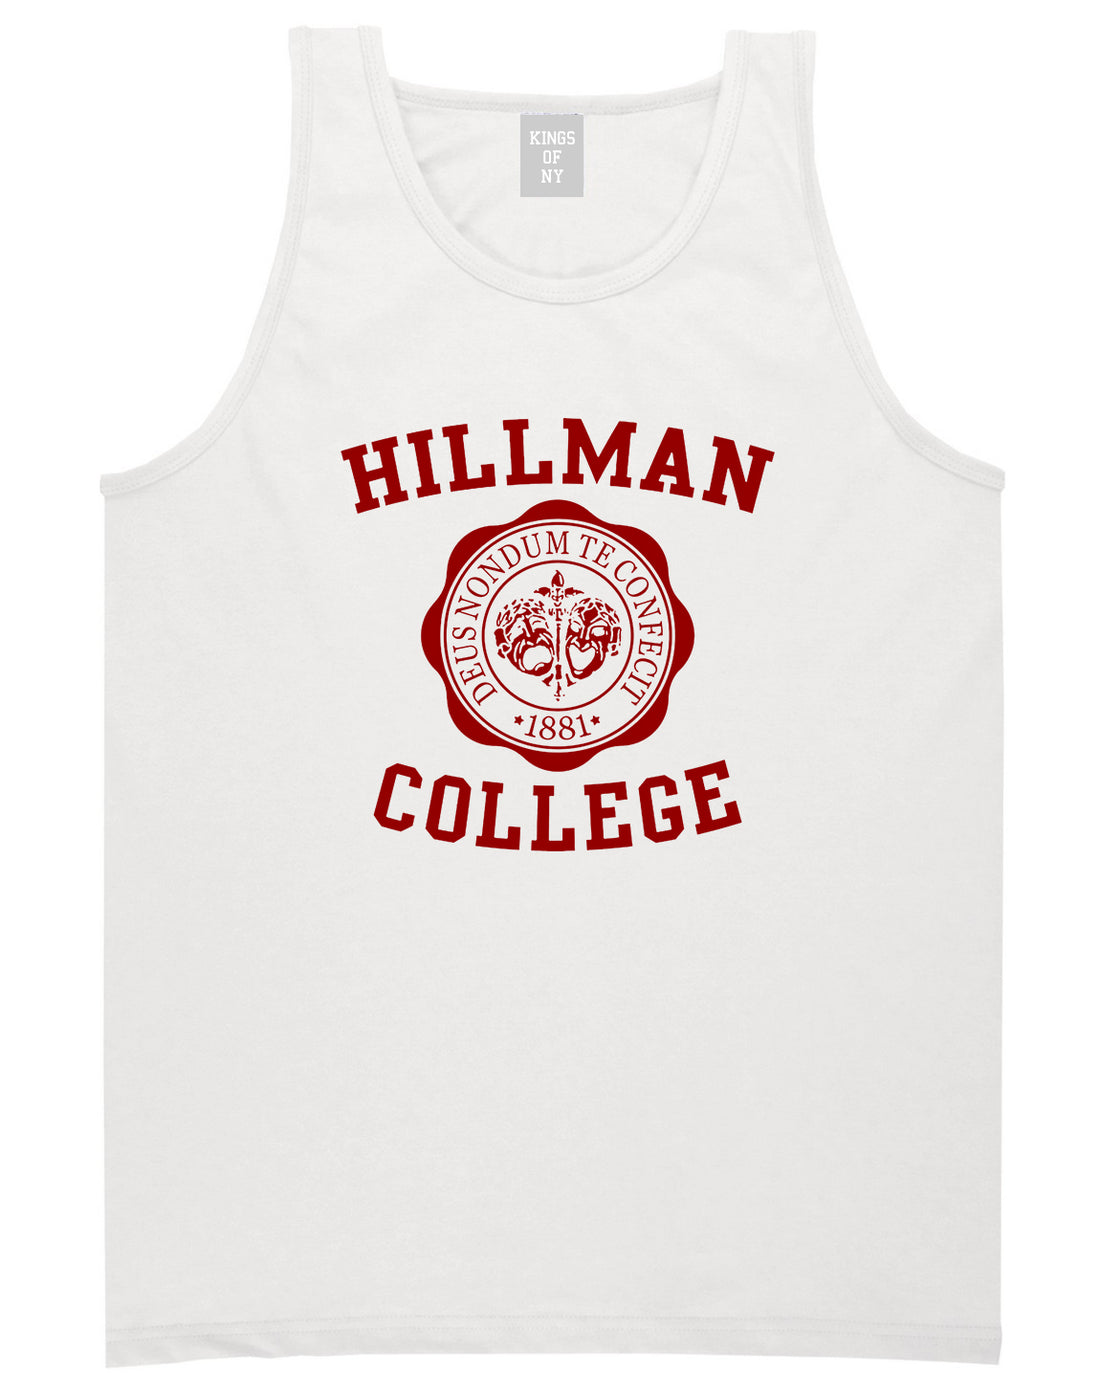 Hillman College Mens Tank Top Shirt White